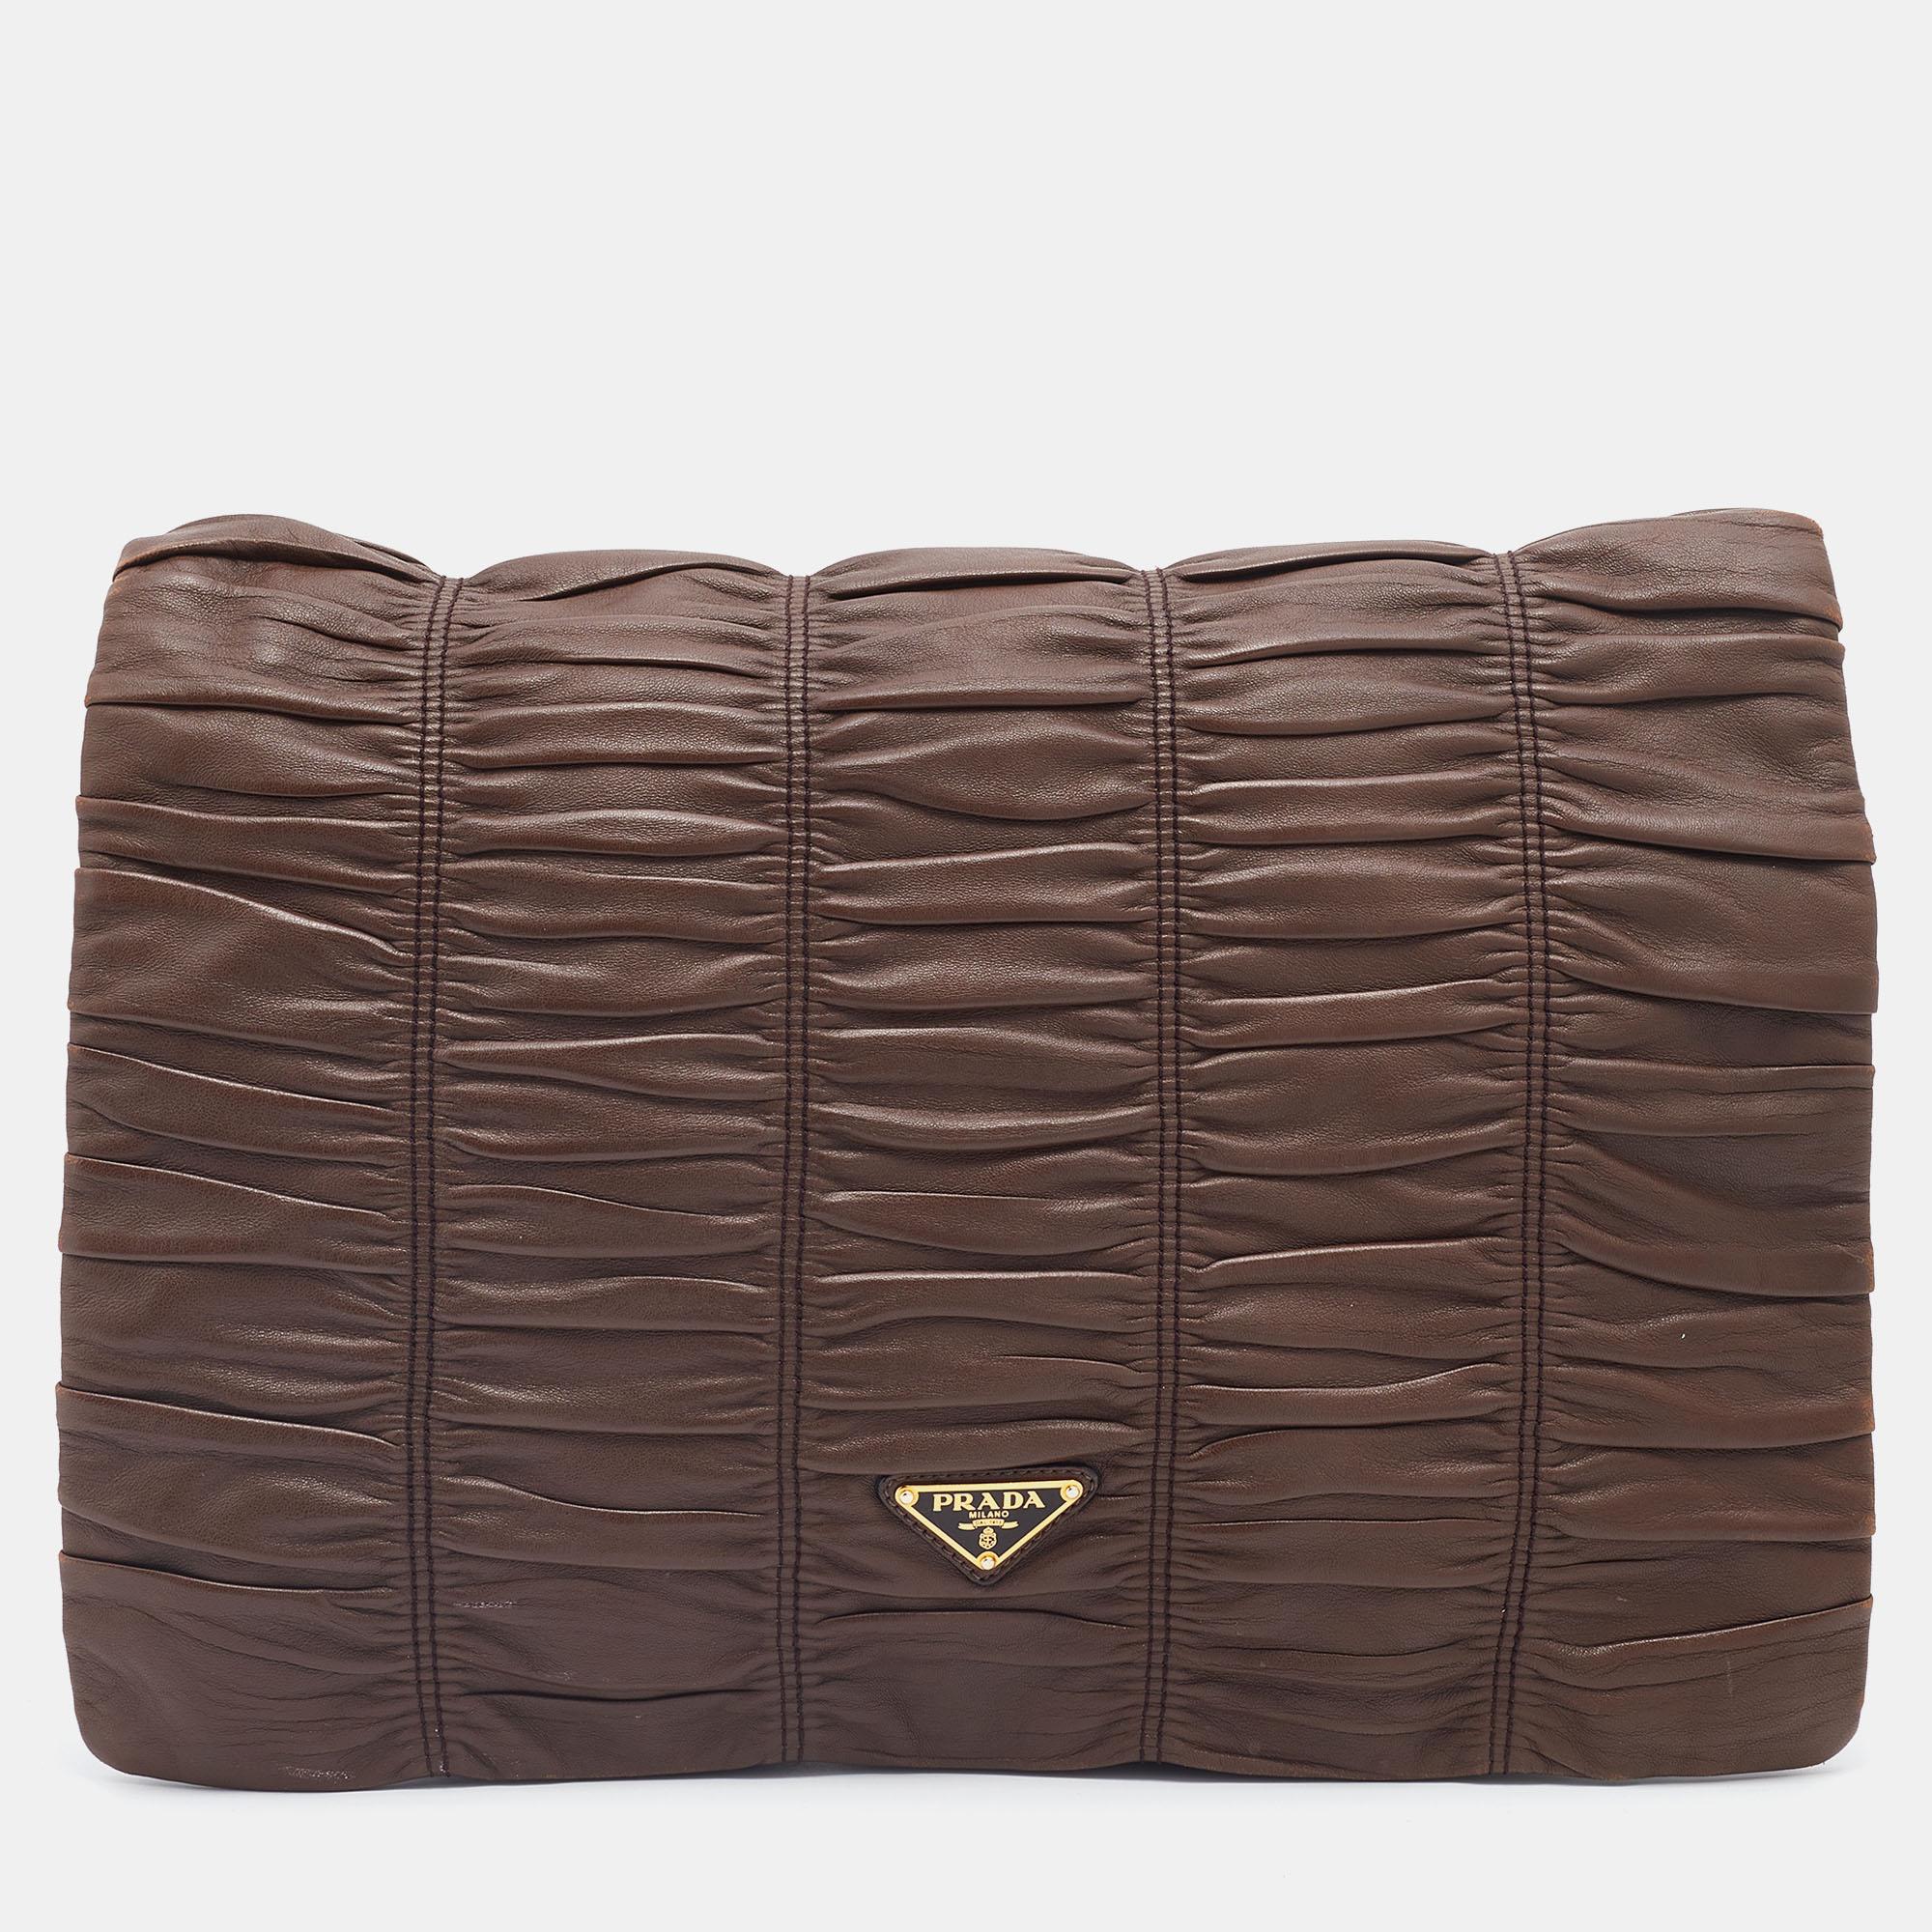 Prada Brown Nappa Gaufre Leather Clutch 5